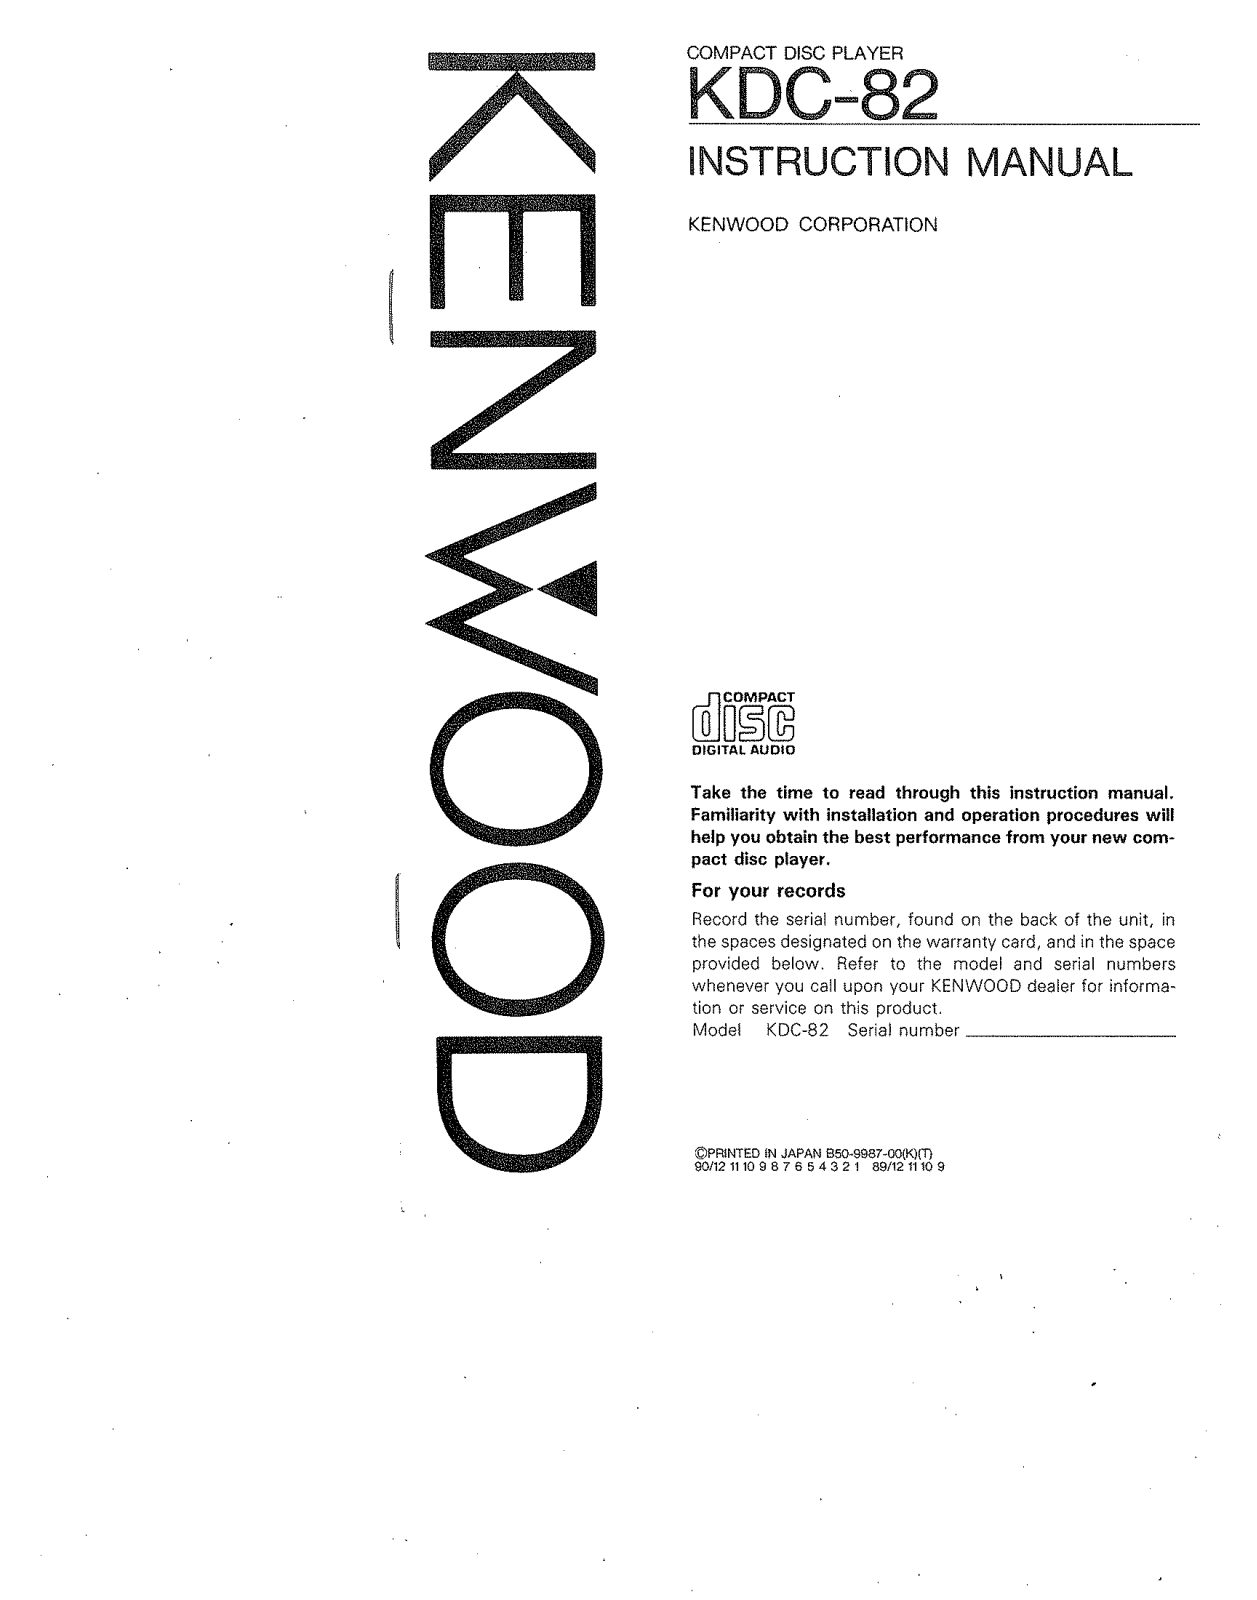 Kenwood KDC-82 Owner's Manual